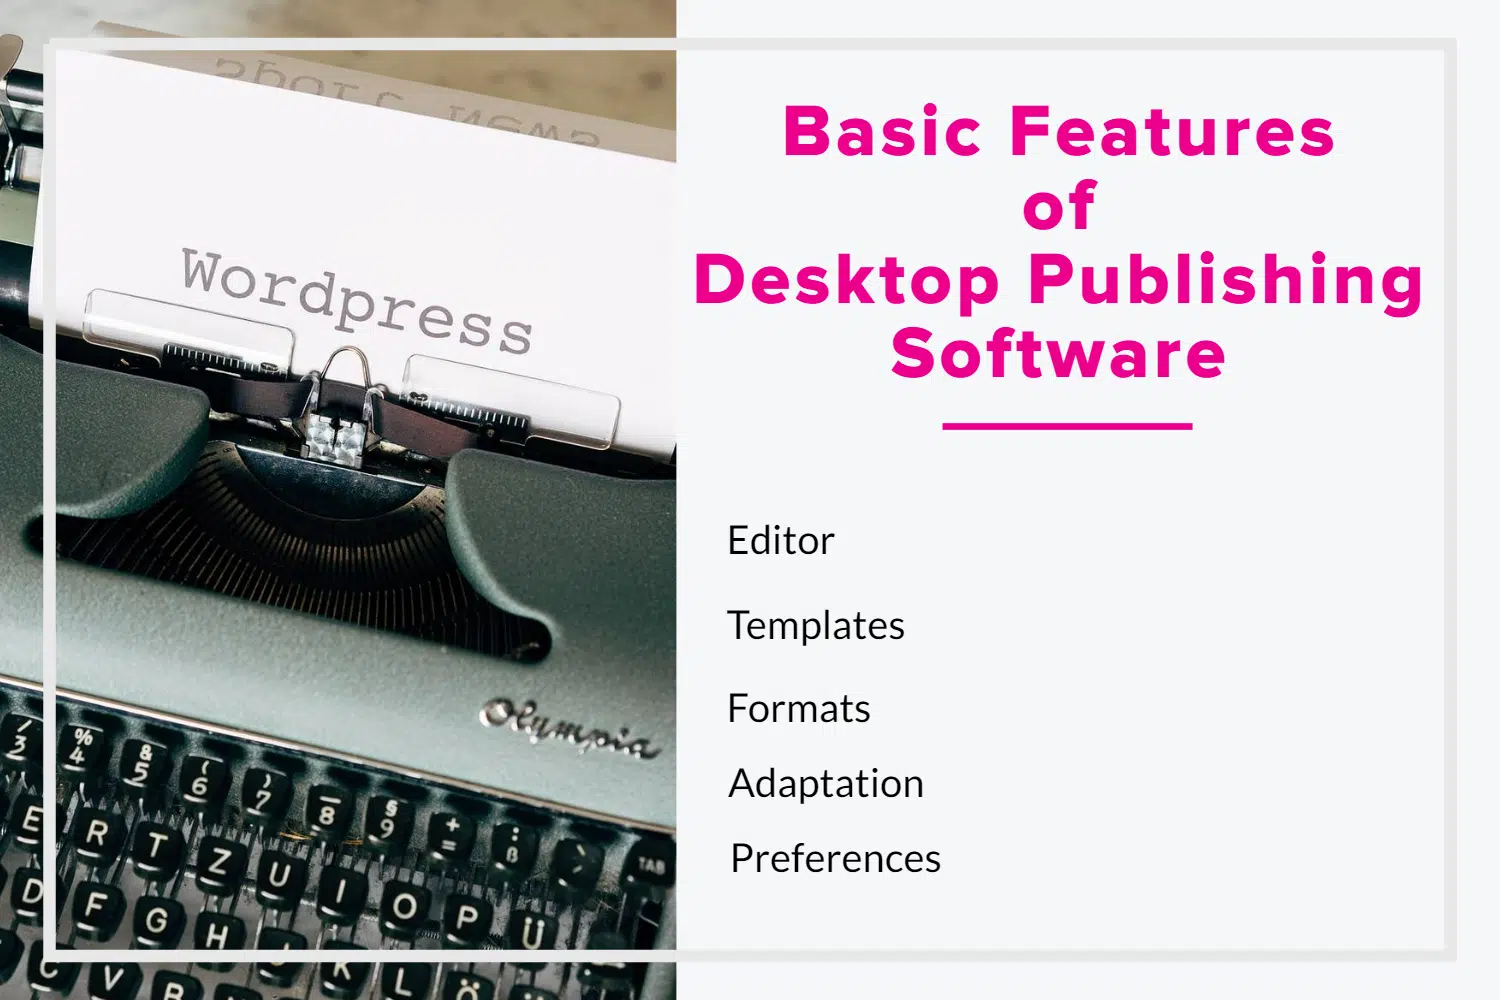 Basic Features of Desktop Publishing Software